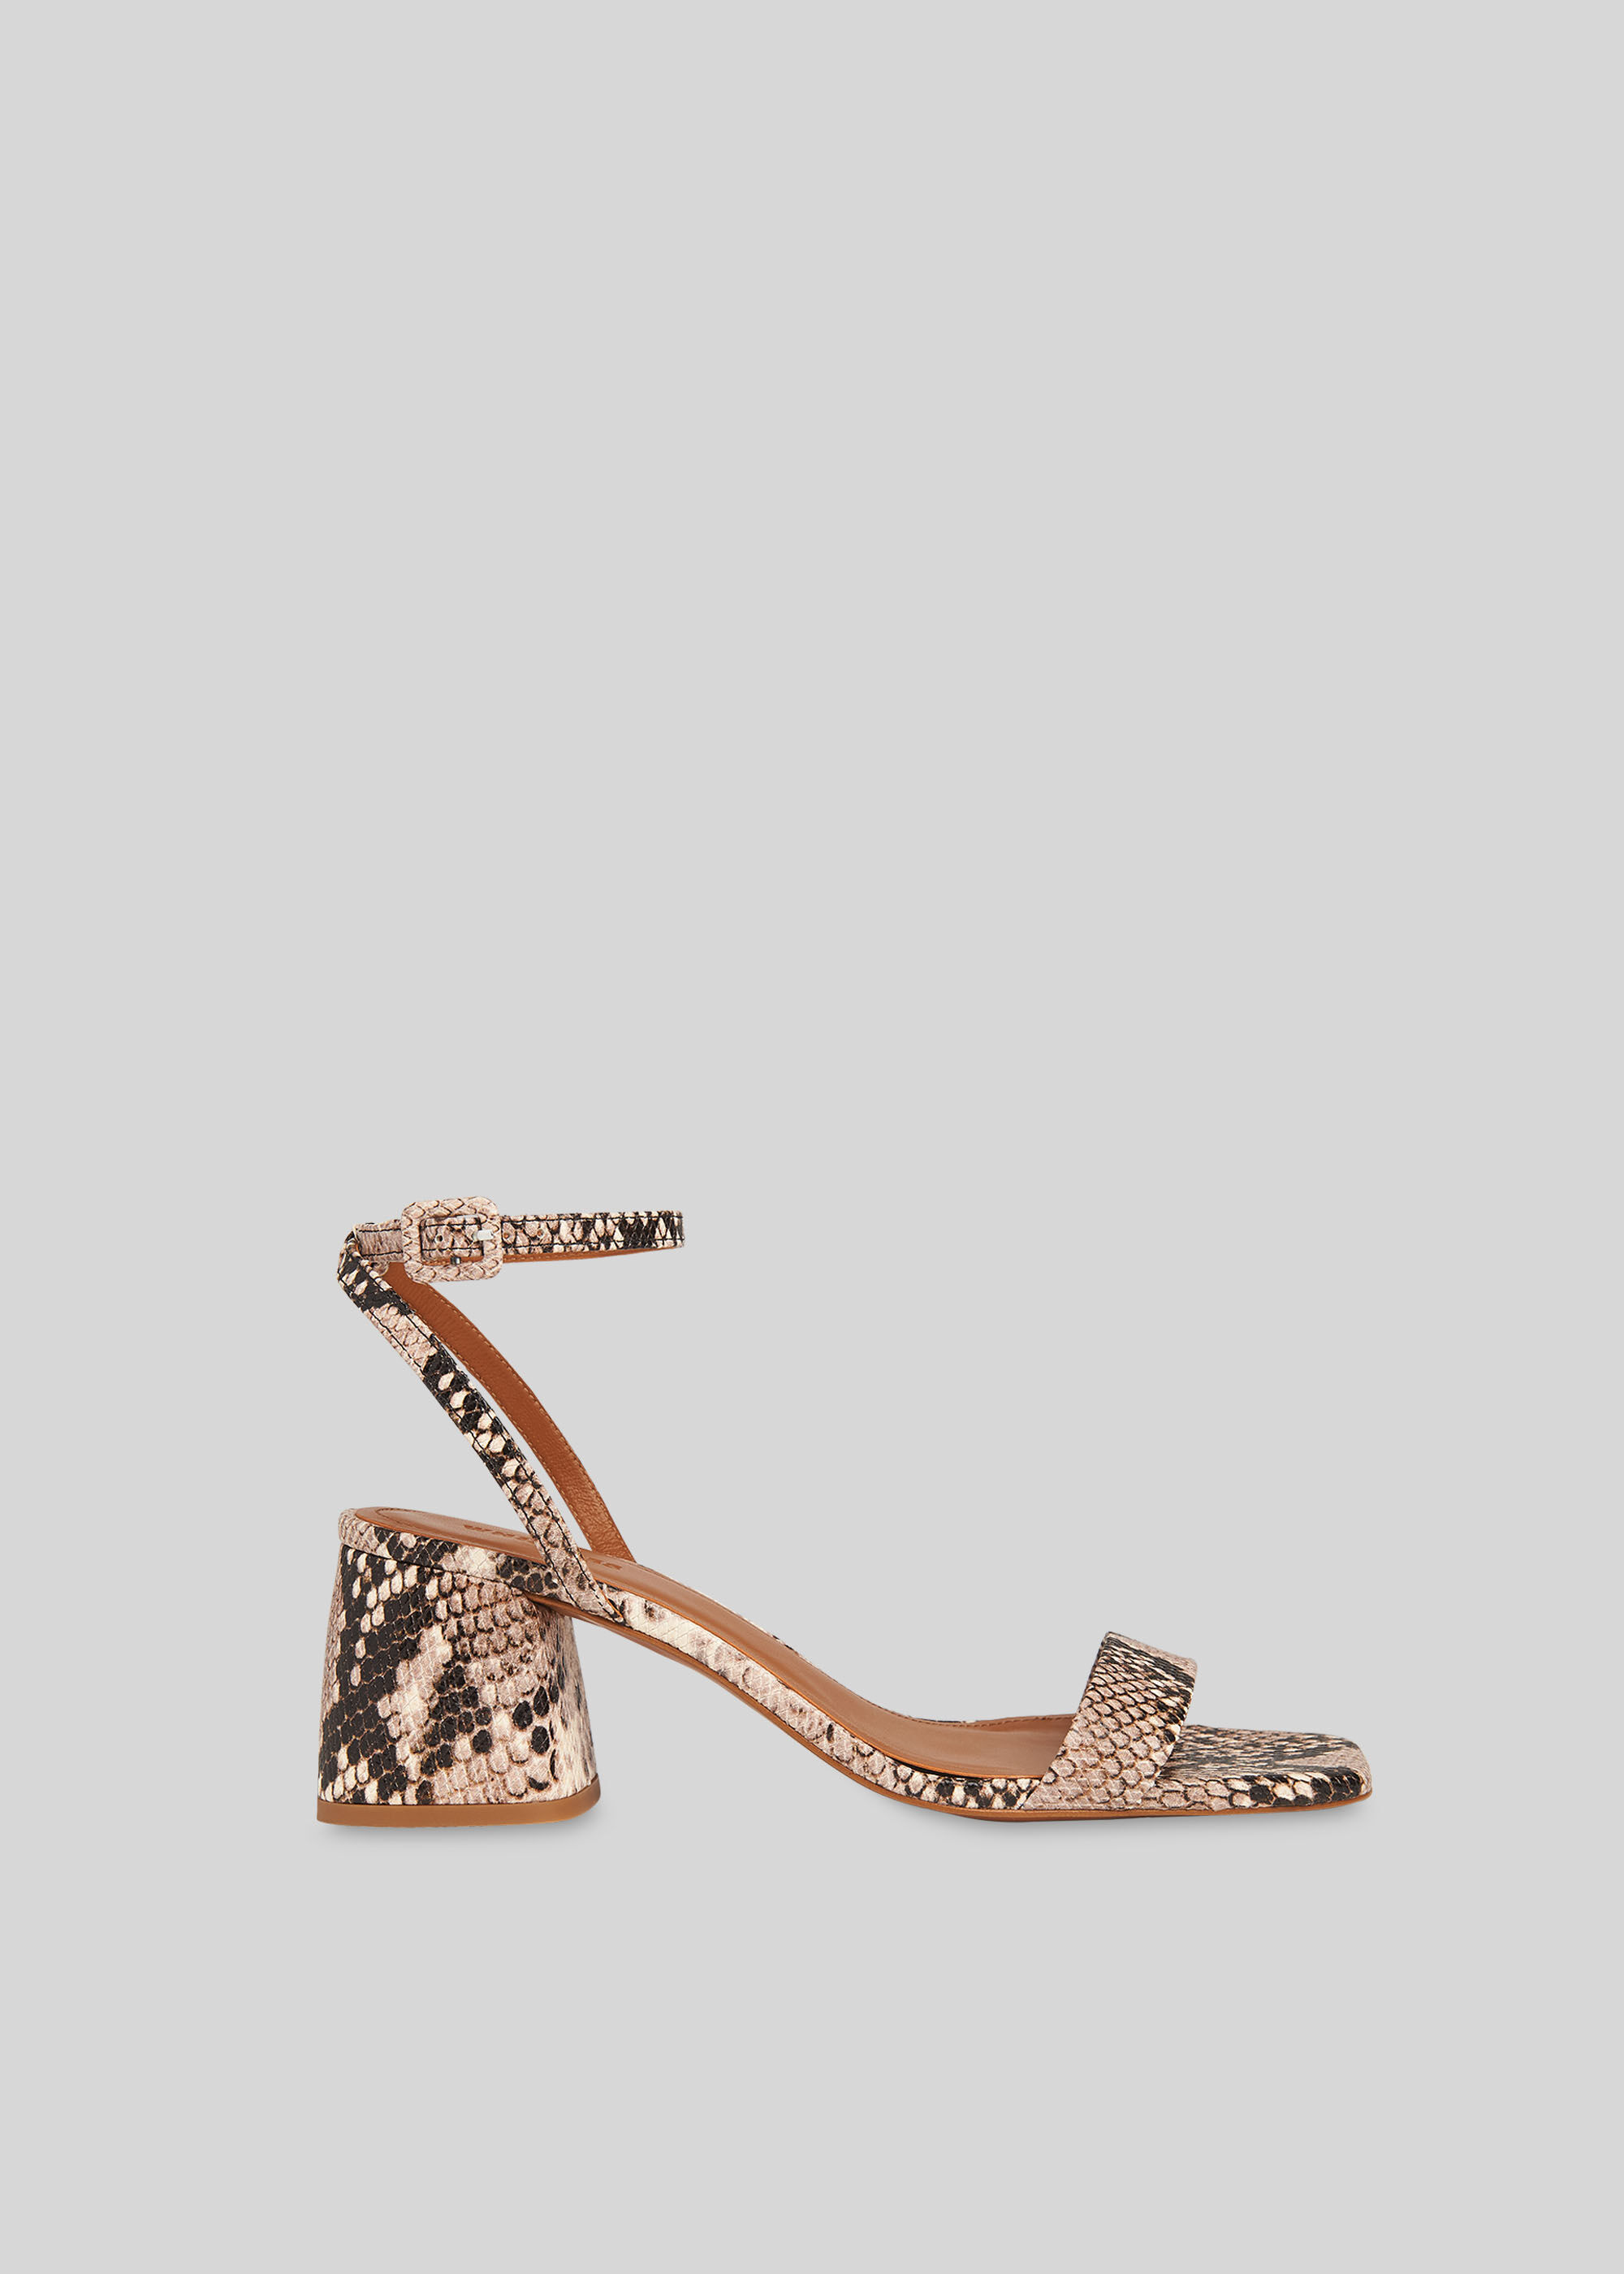 snake leather heels